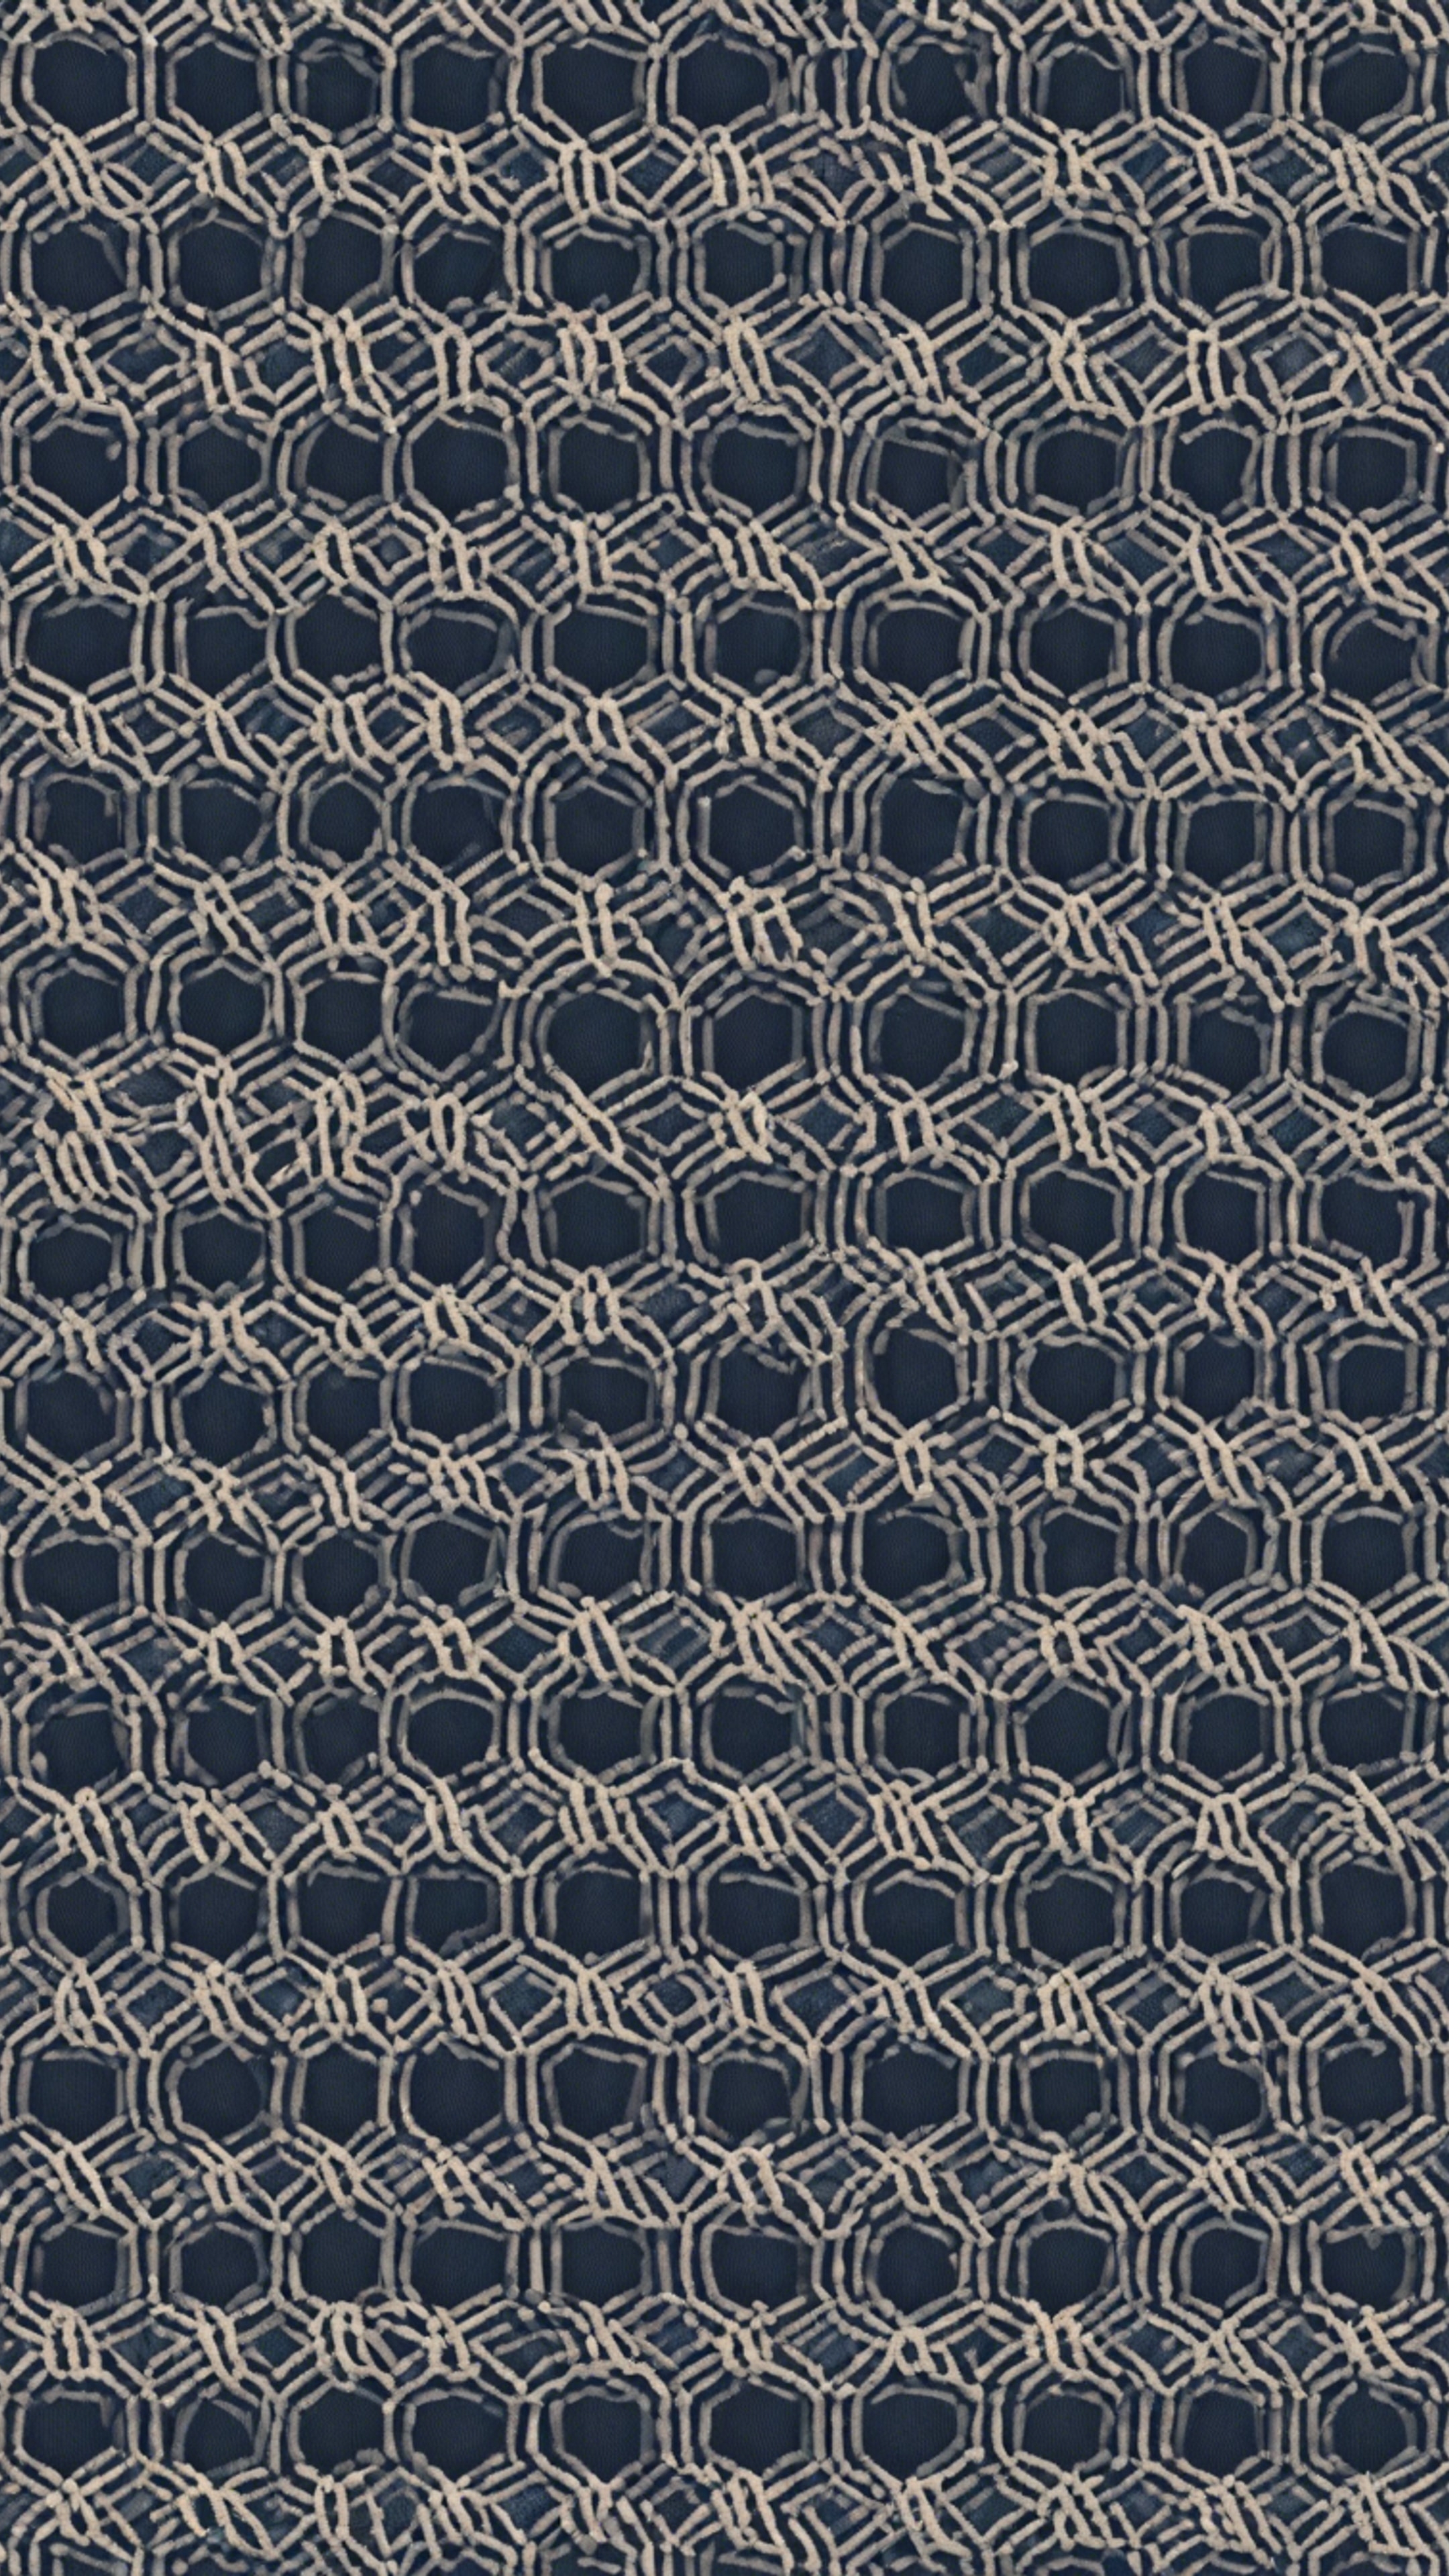 A geometric seamless pattern inspired by traditional Japanese sashiko stitching Wallpaper[d49f05622a7b4579b9ed]